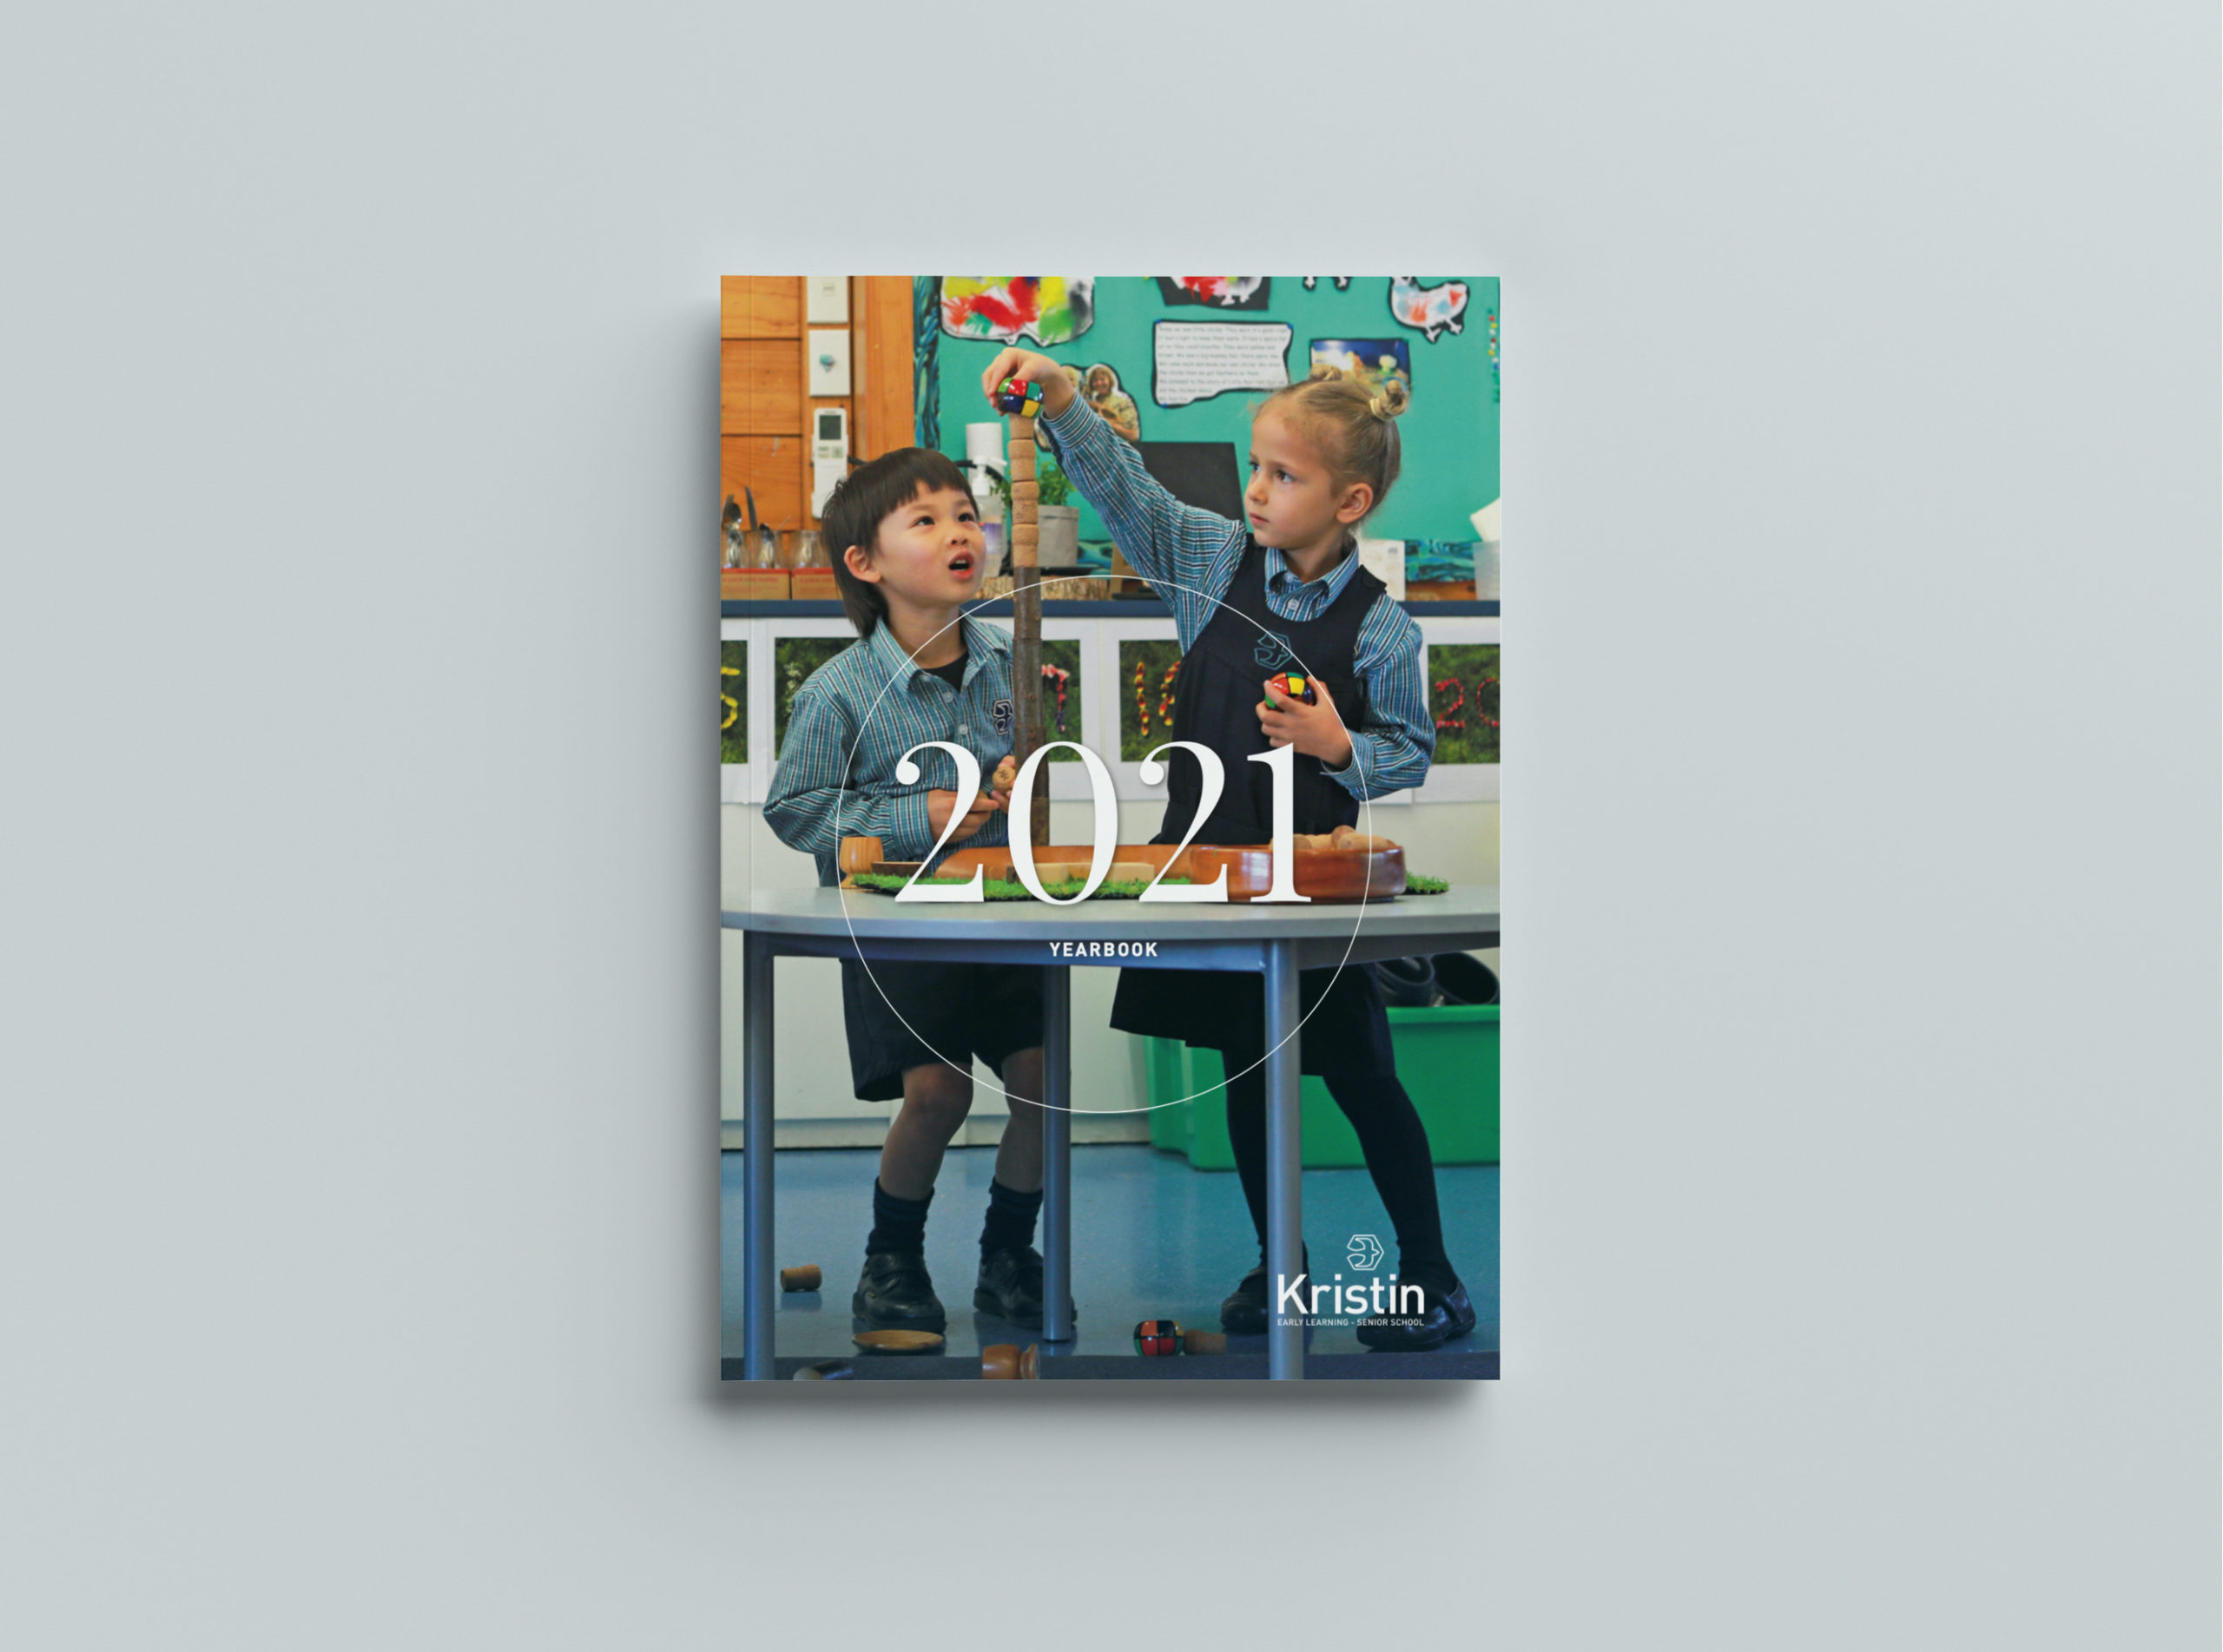 Kristin School 2021 Yearbook design